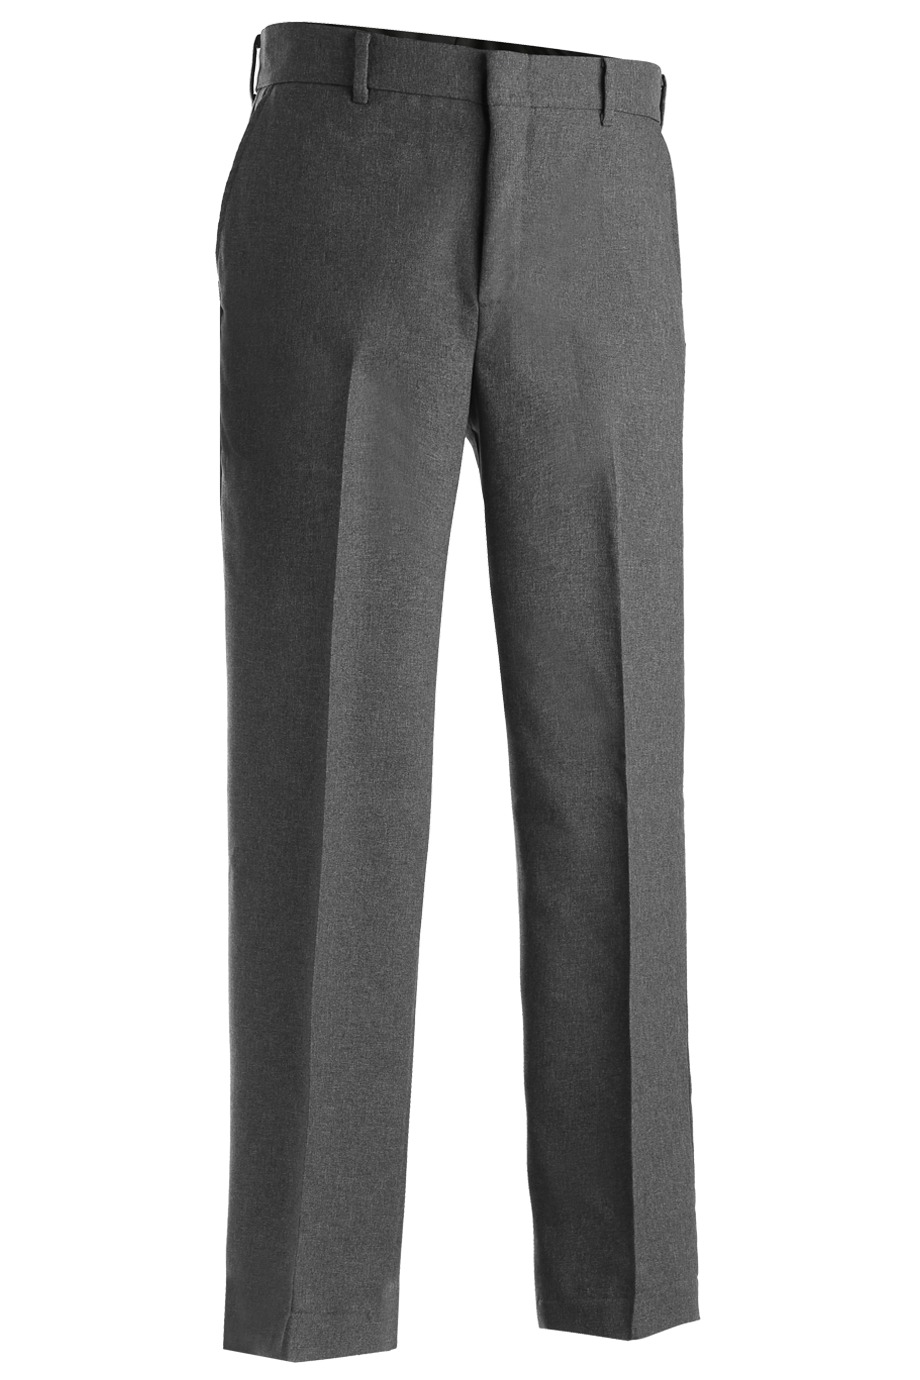 Men's Heather Grey Security Pants – Grunt Apparel Workwear